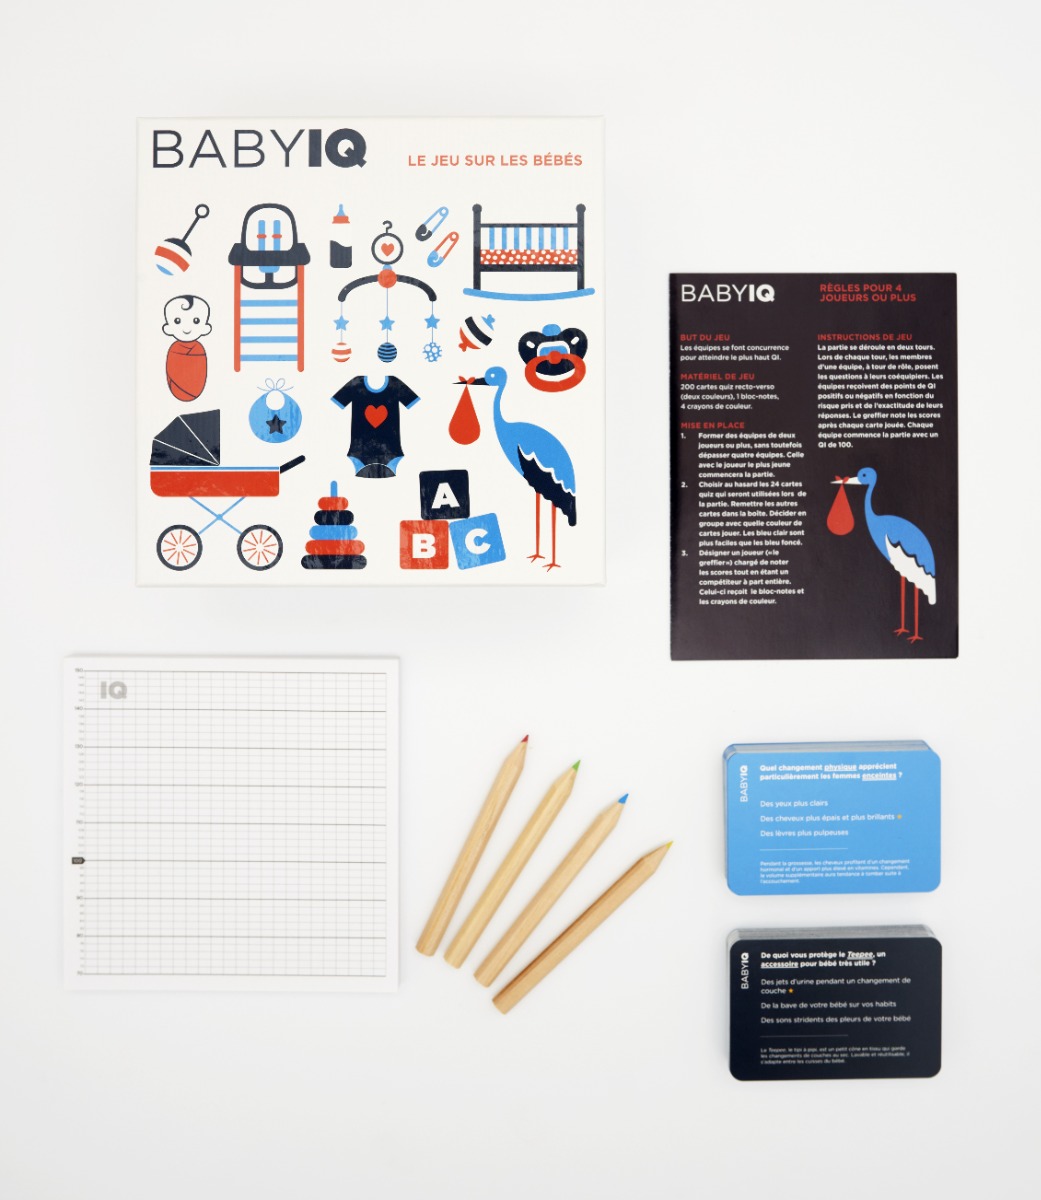 BabyIQ - The Game Image 2